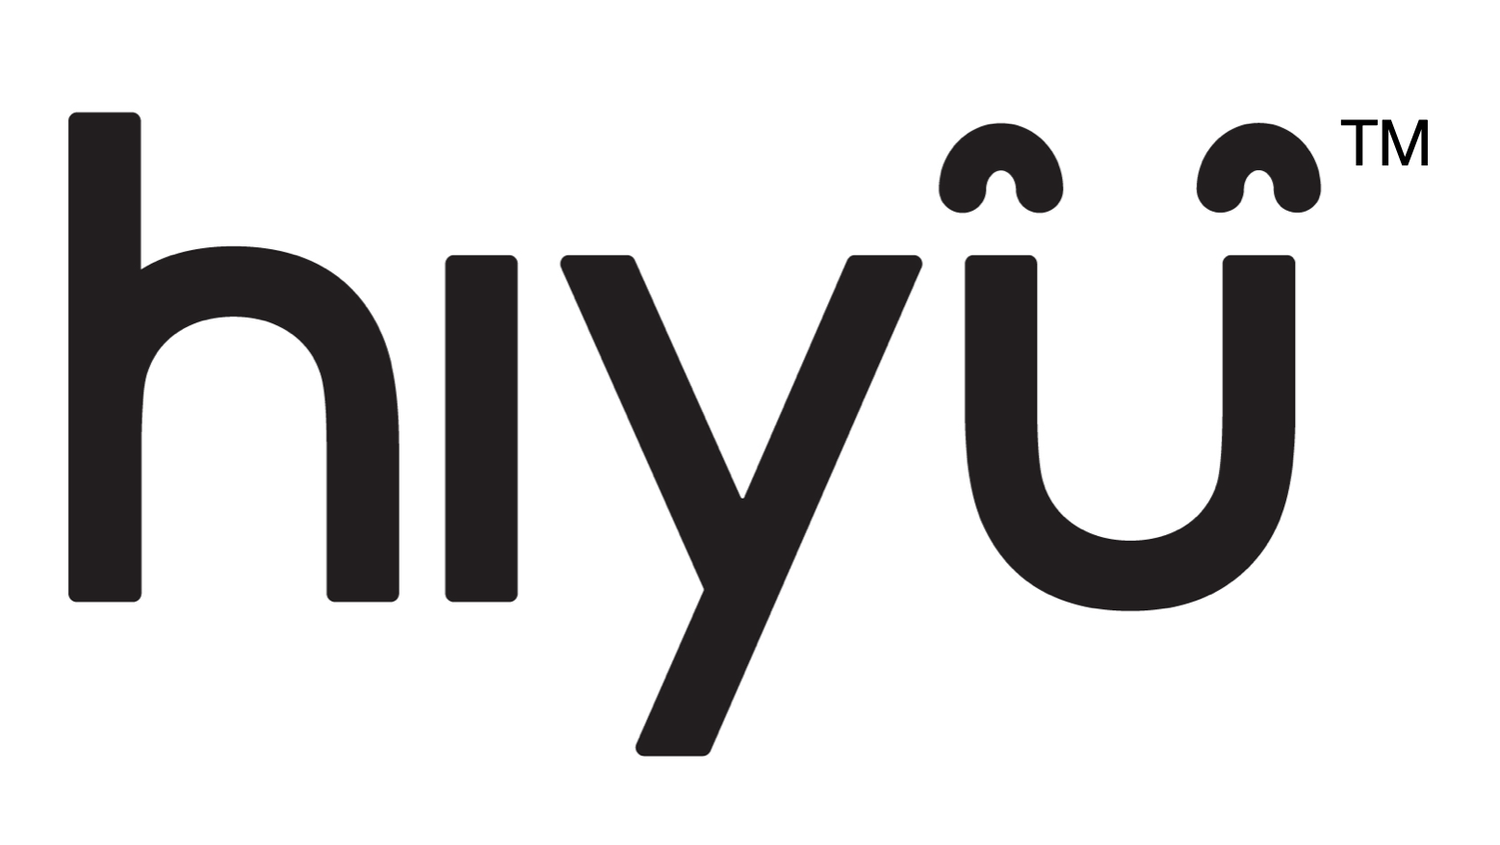 Hiyu Internal Communications Agency | Internal Communication Consulting